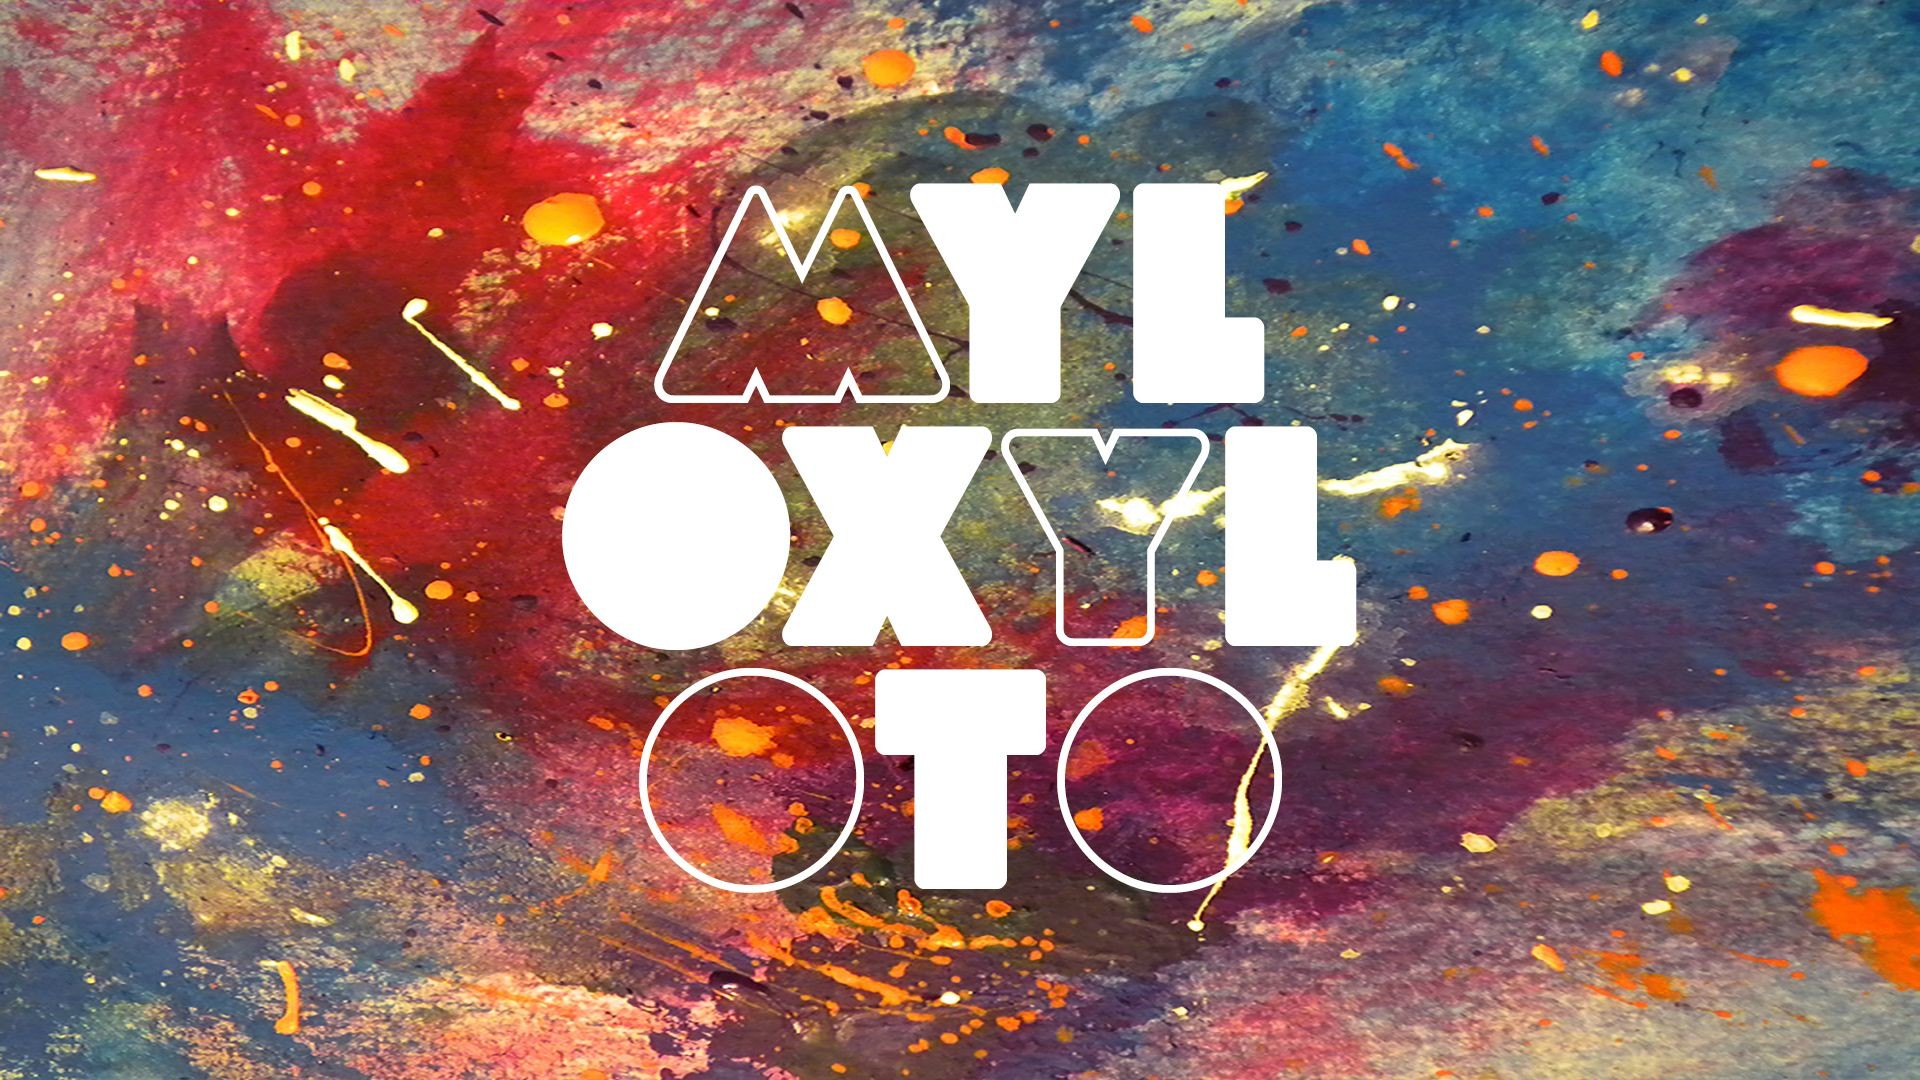 1920x1080 Coldplay - Mylo Xyloto (Alternate Album Cover 3) (Wallpaper)